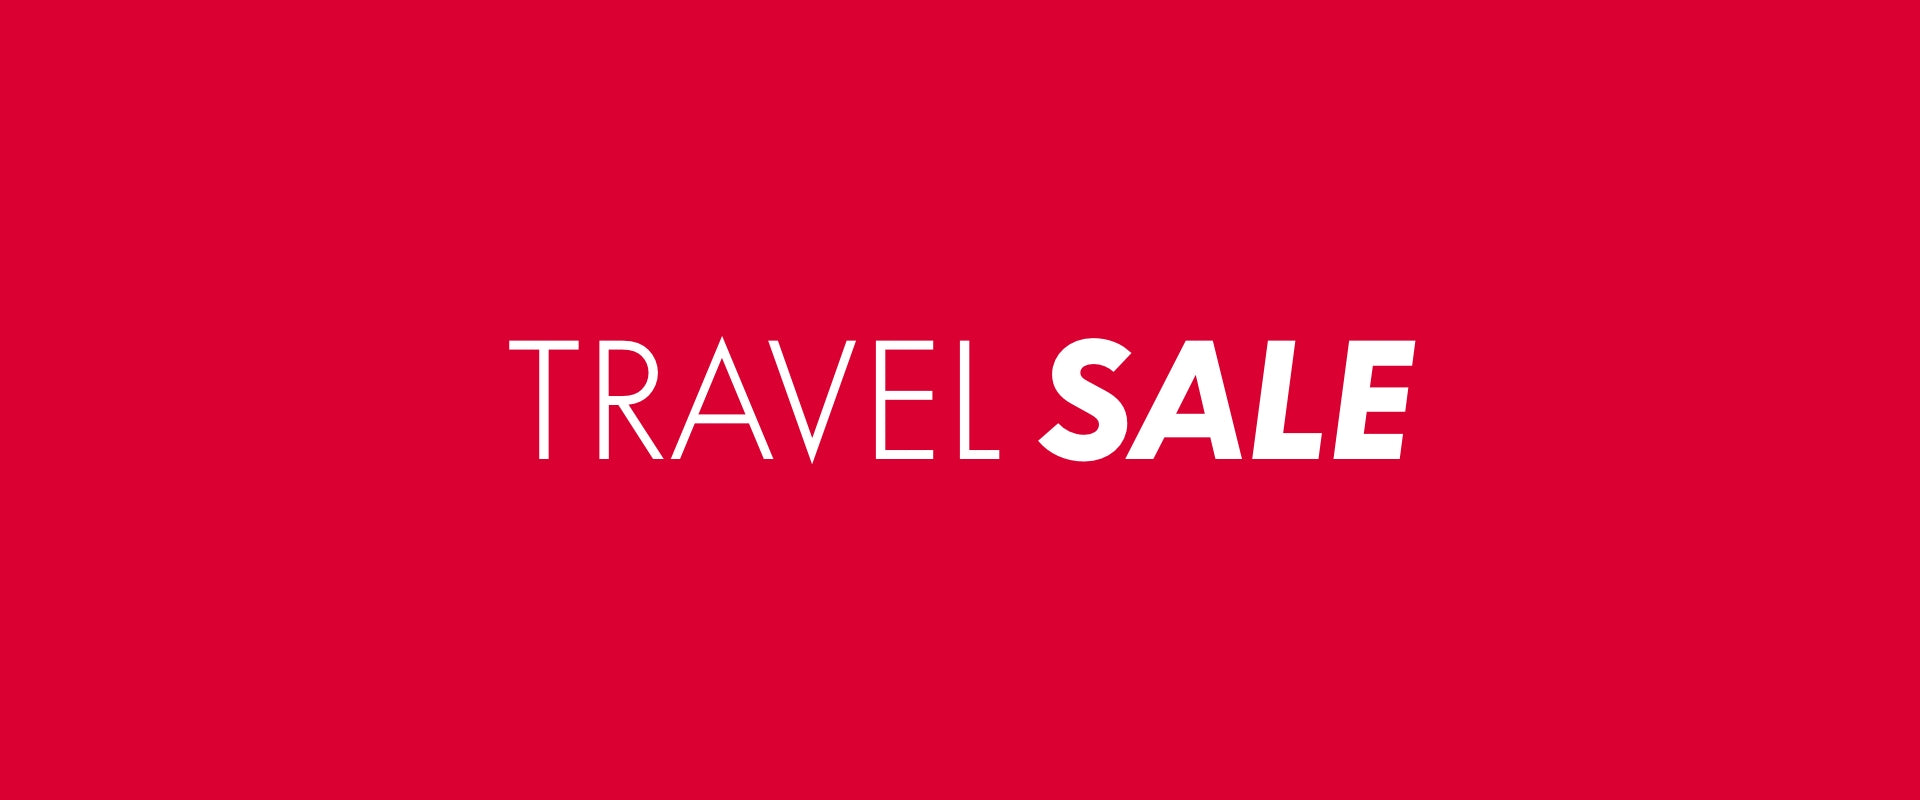 Travel Sale